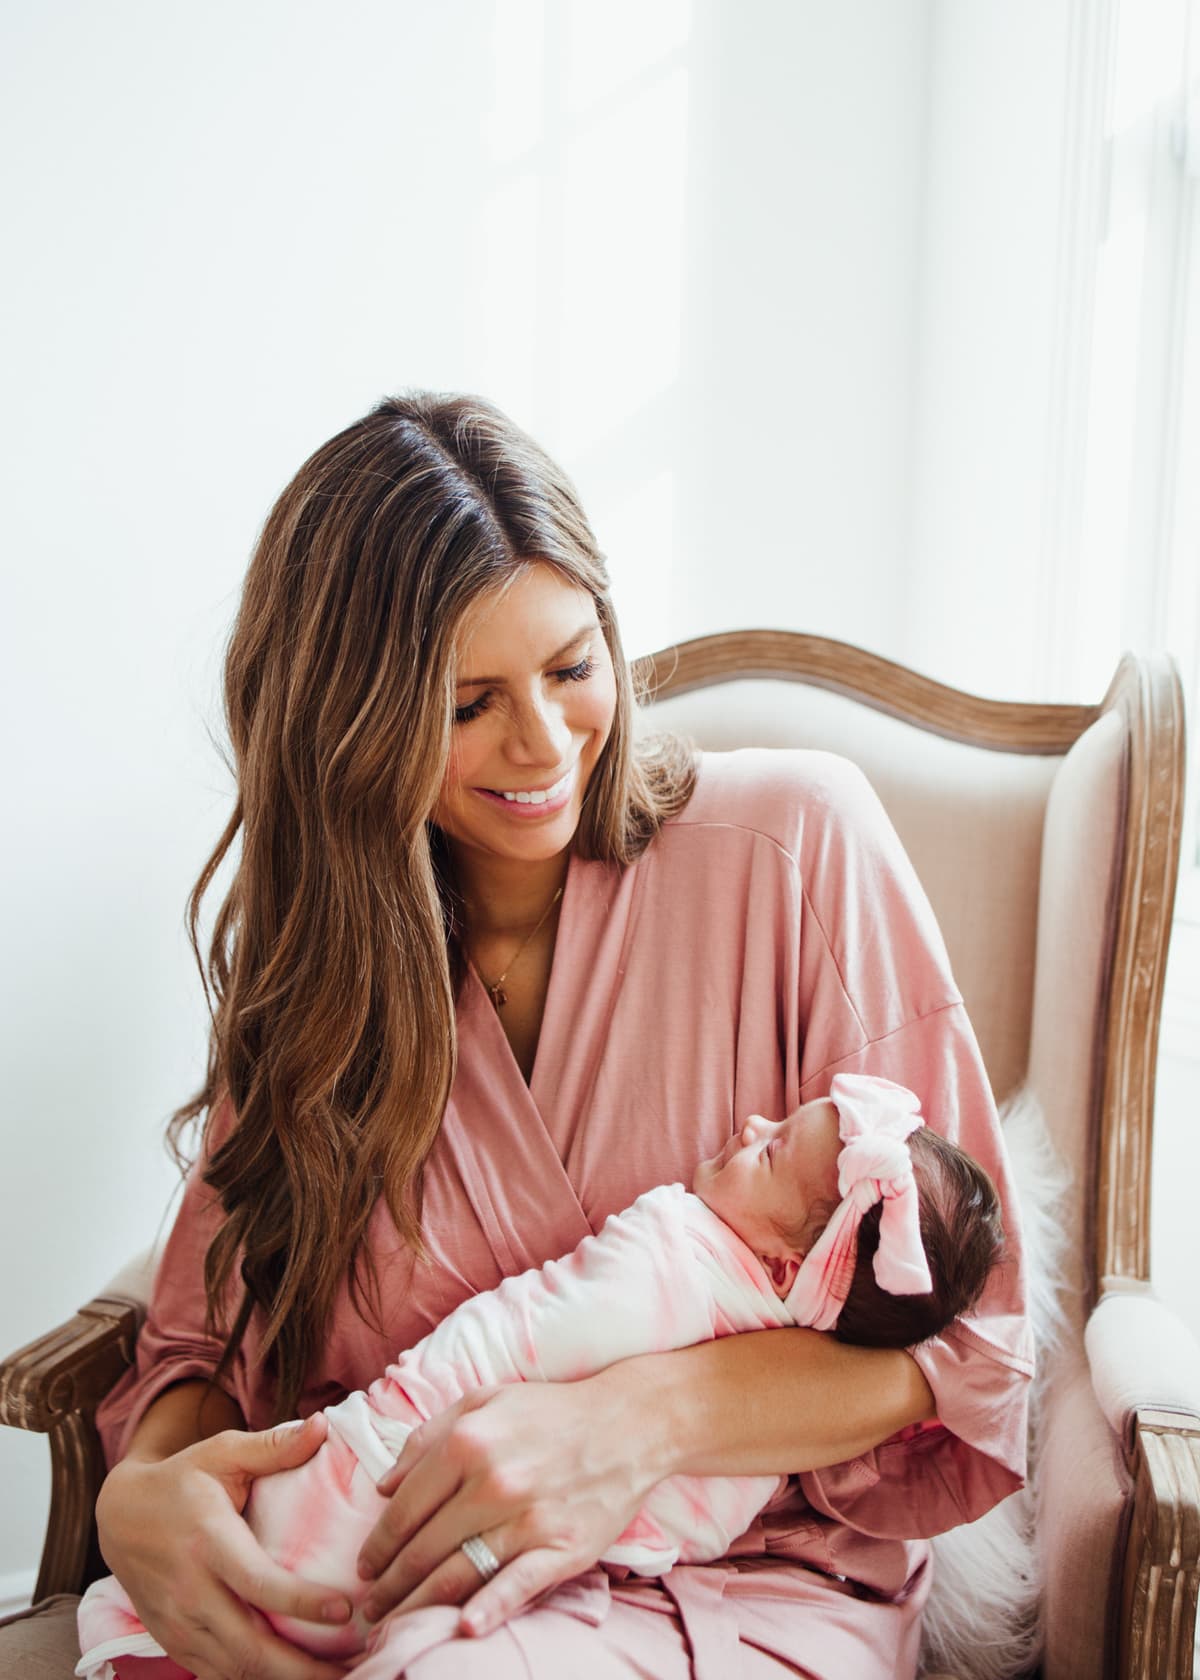 Csection Mommas: Rash - April 2019 Babies, Forums